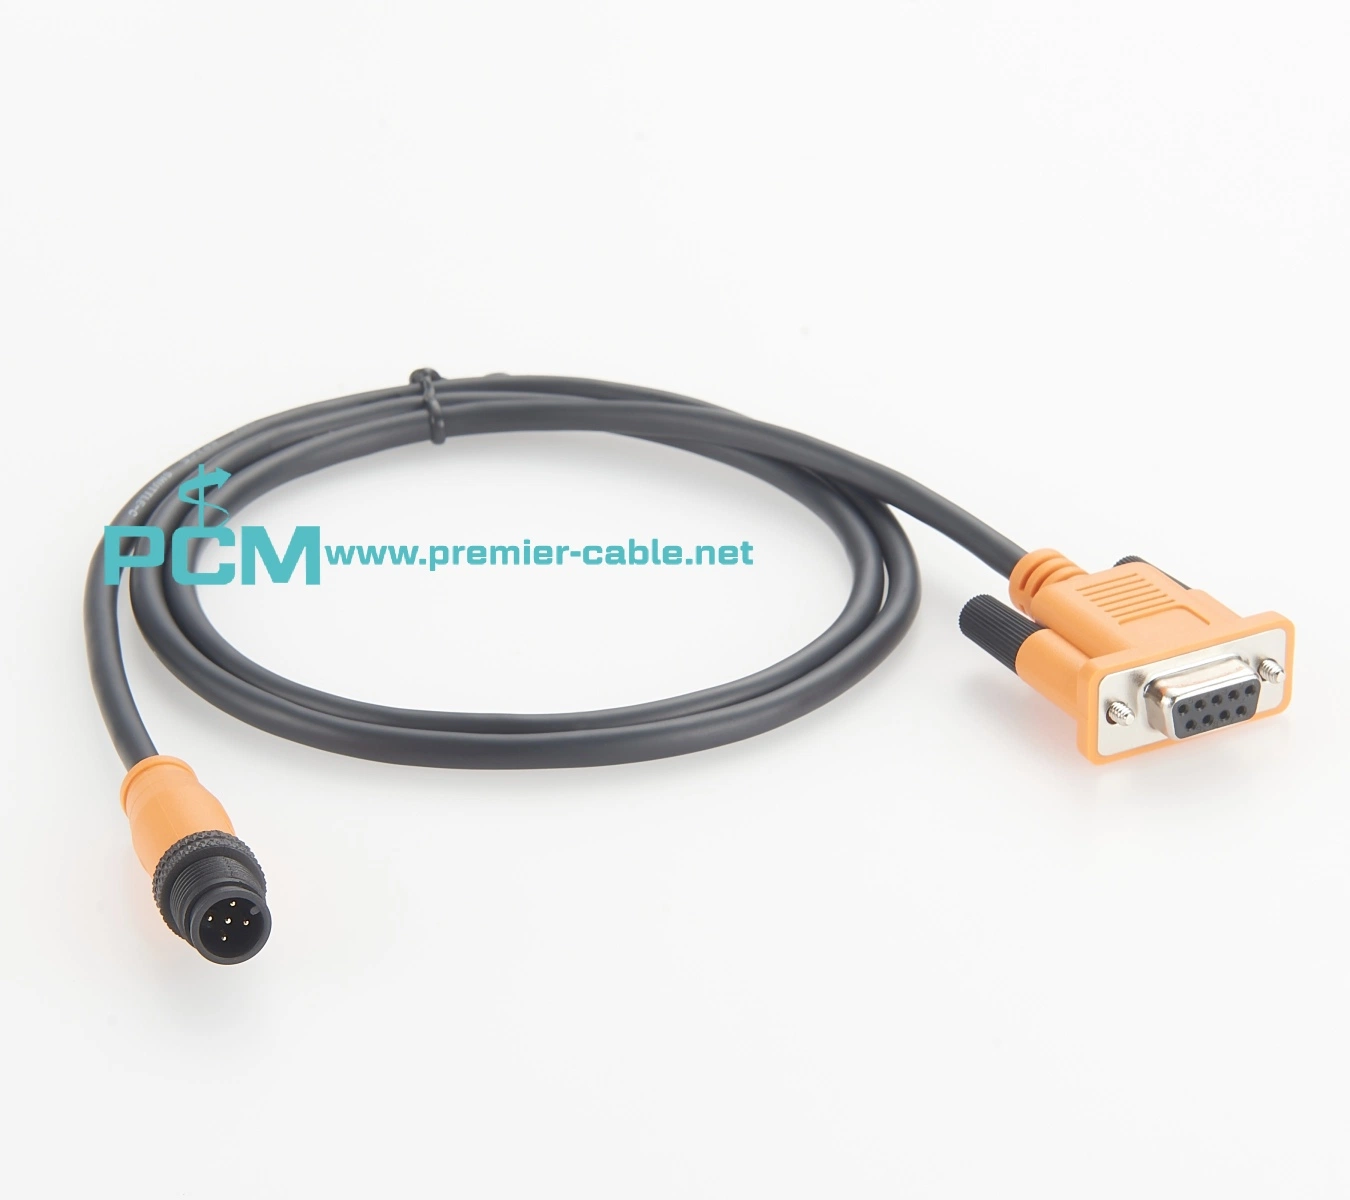 Cable Premier M12 cable adaptador NMEA 2000 CANopen